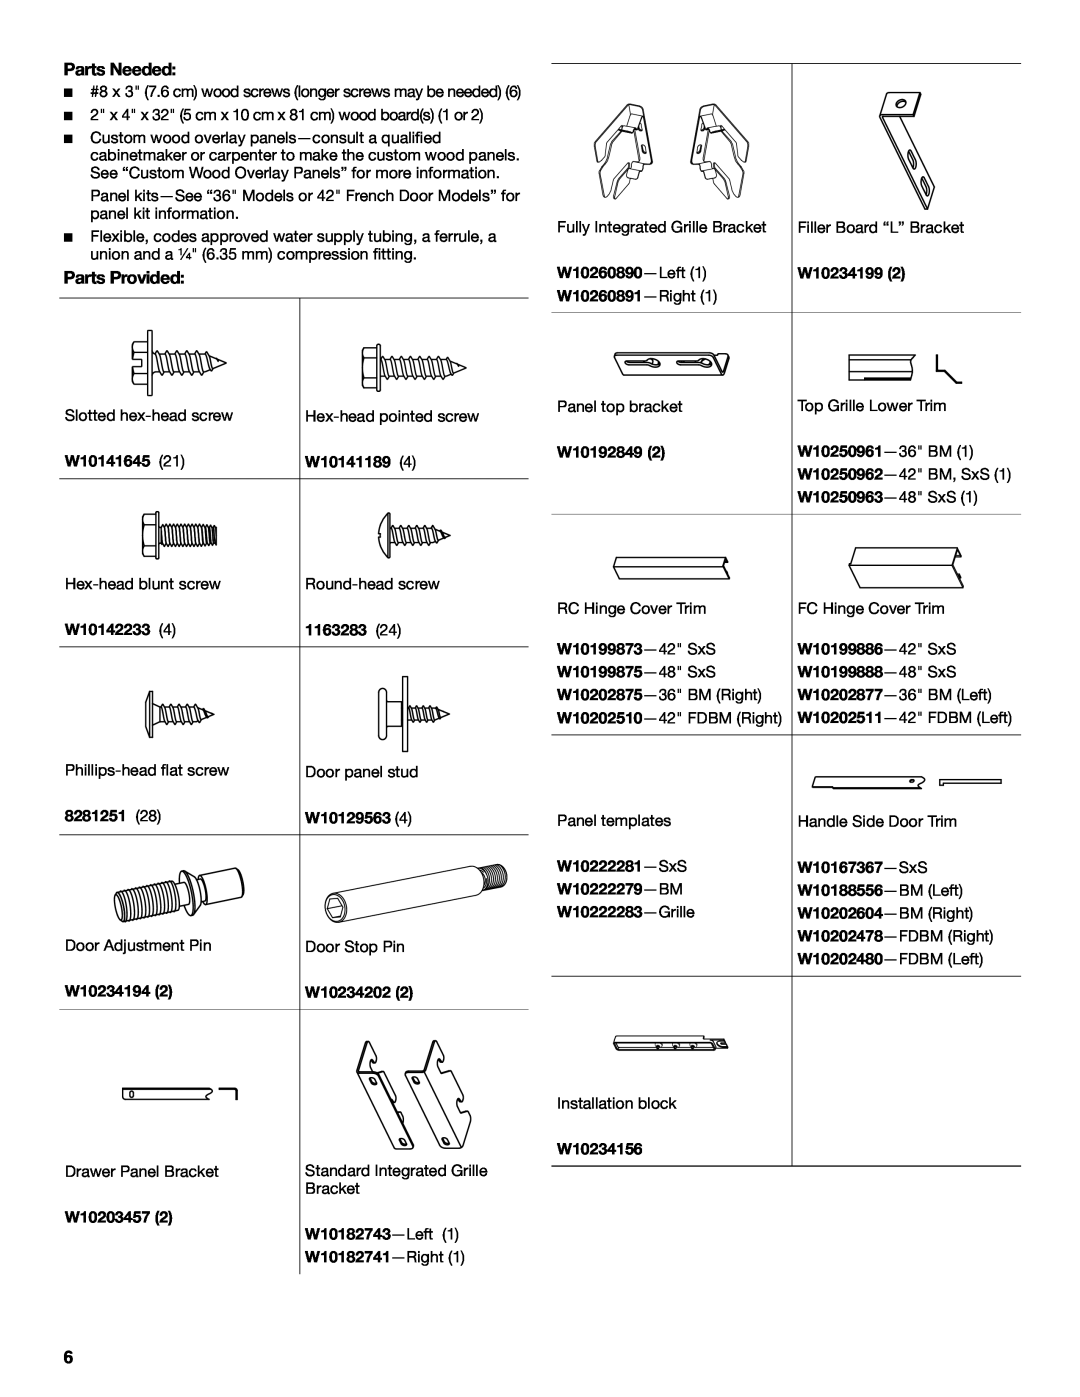 Jenn-Air W10379136B manual Parts Needed, Parts Provided 